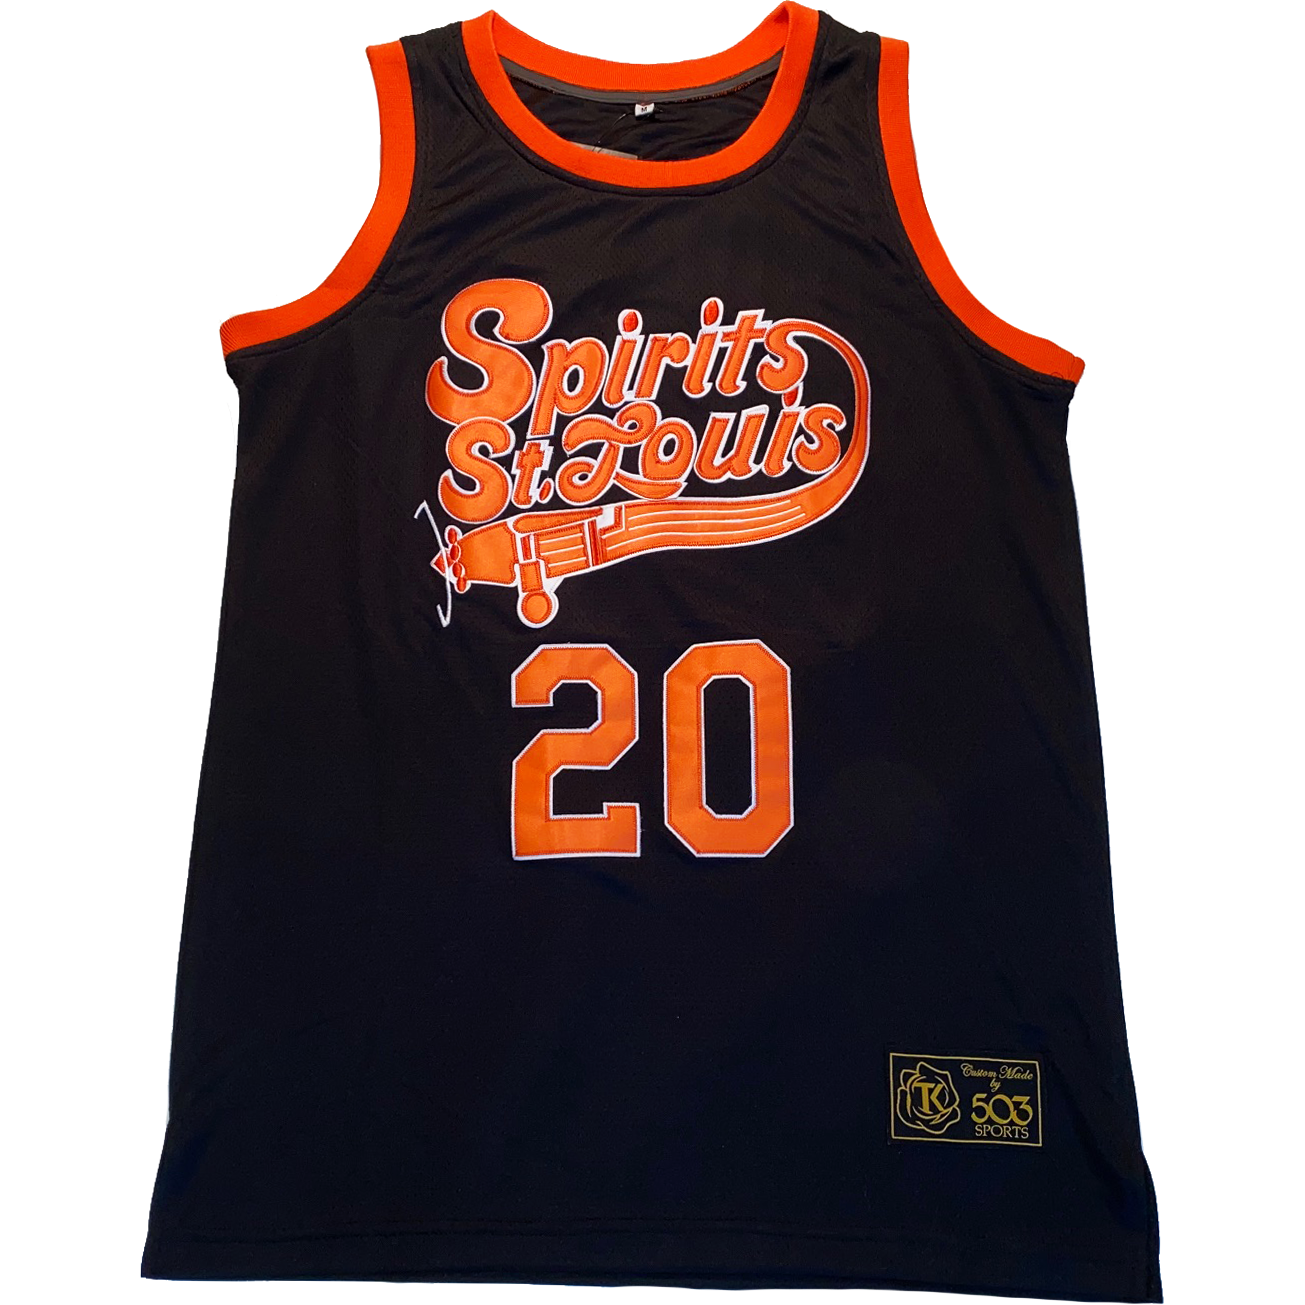 503 Sports Spirits of St Louis T-Shirt - Orange - Cotton - Small (S) - Royal Retros